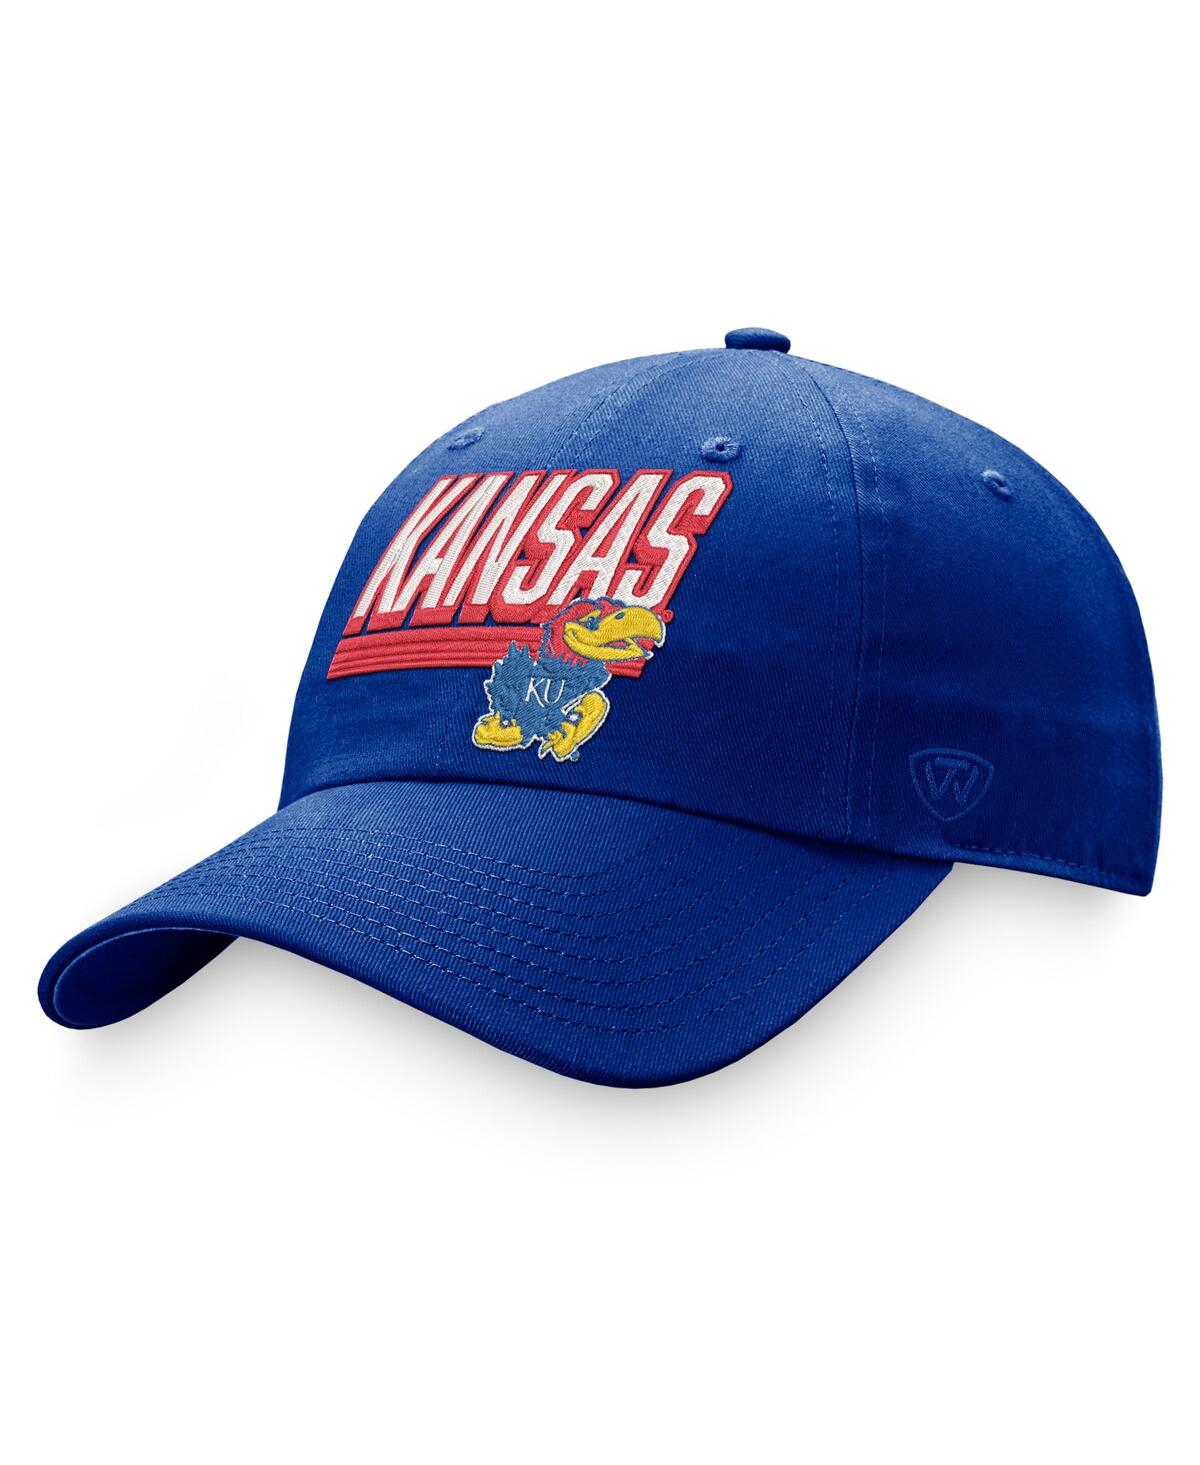 Men's Top of the World Royal Kansas Jayhawks Slice Adjustable Hat - Royal